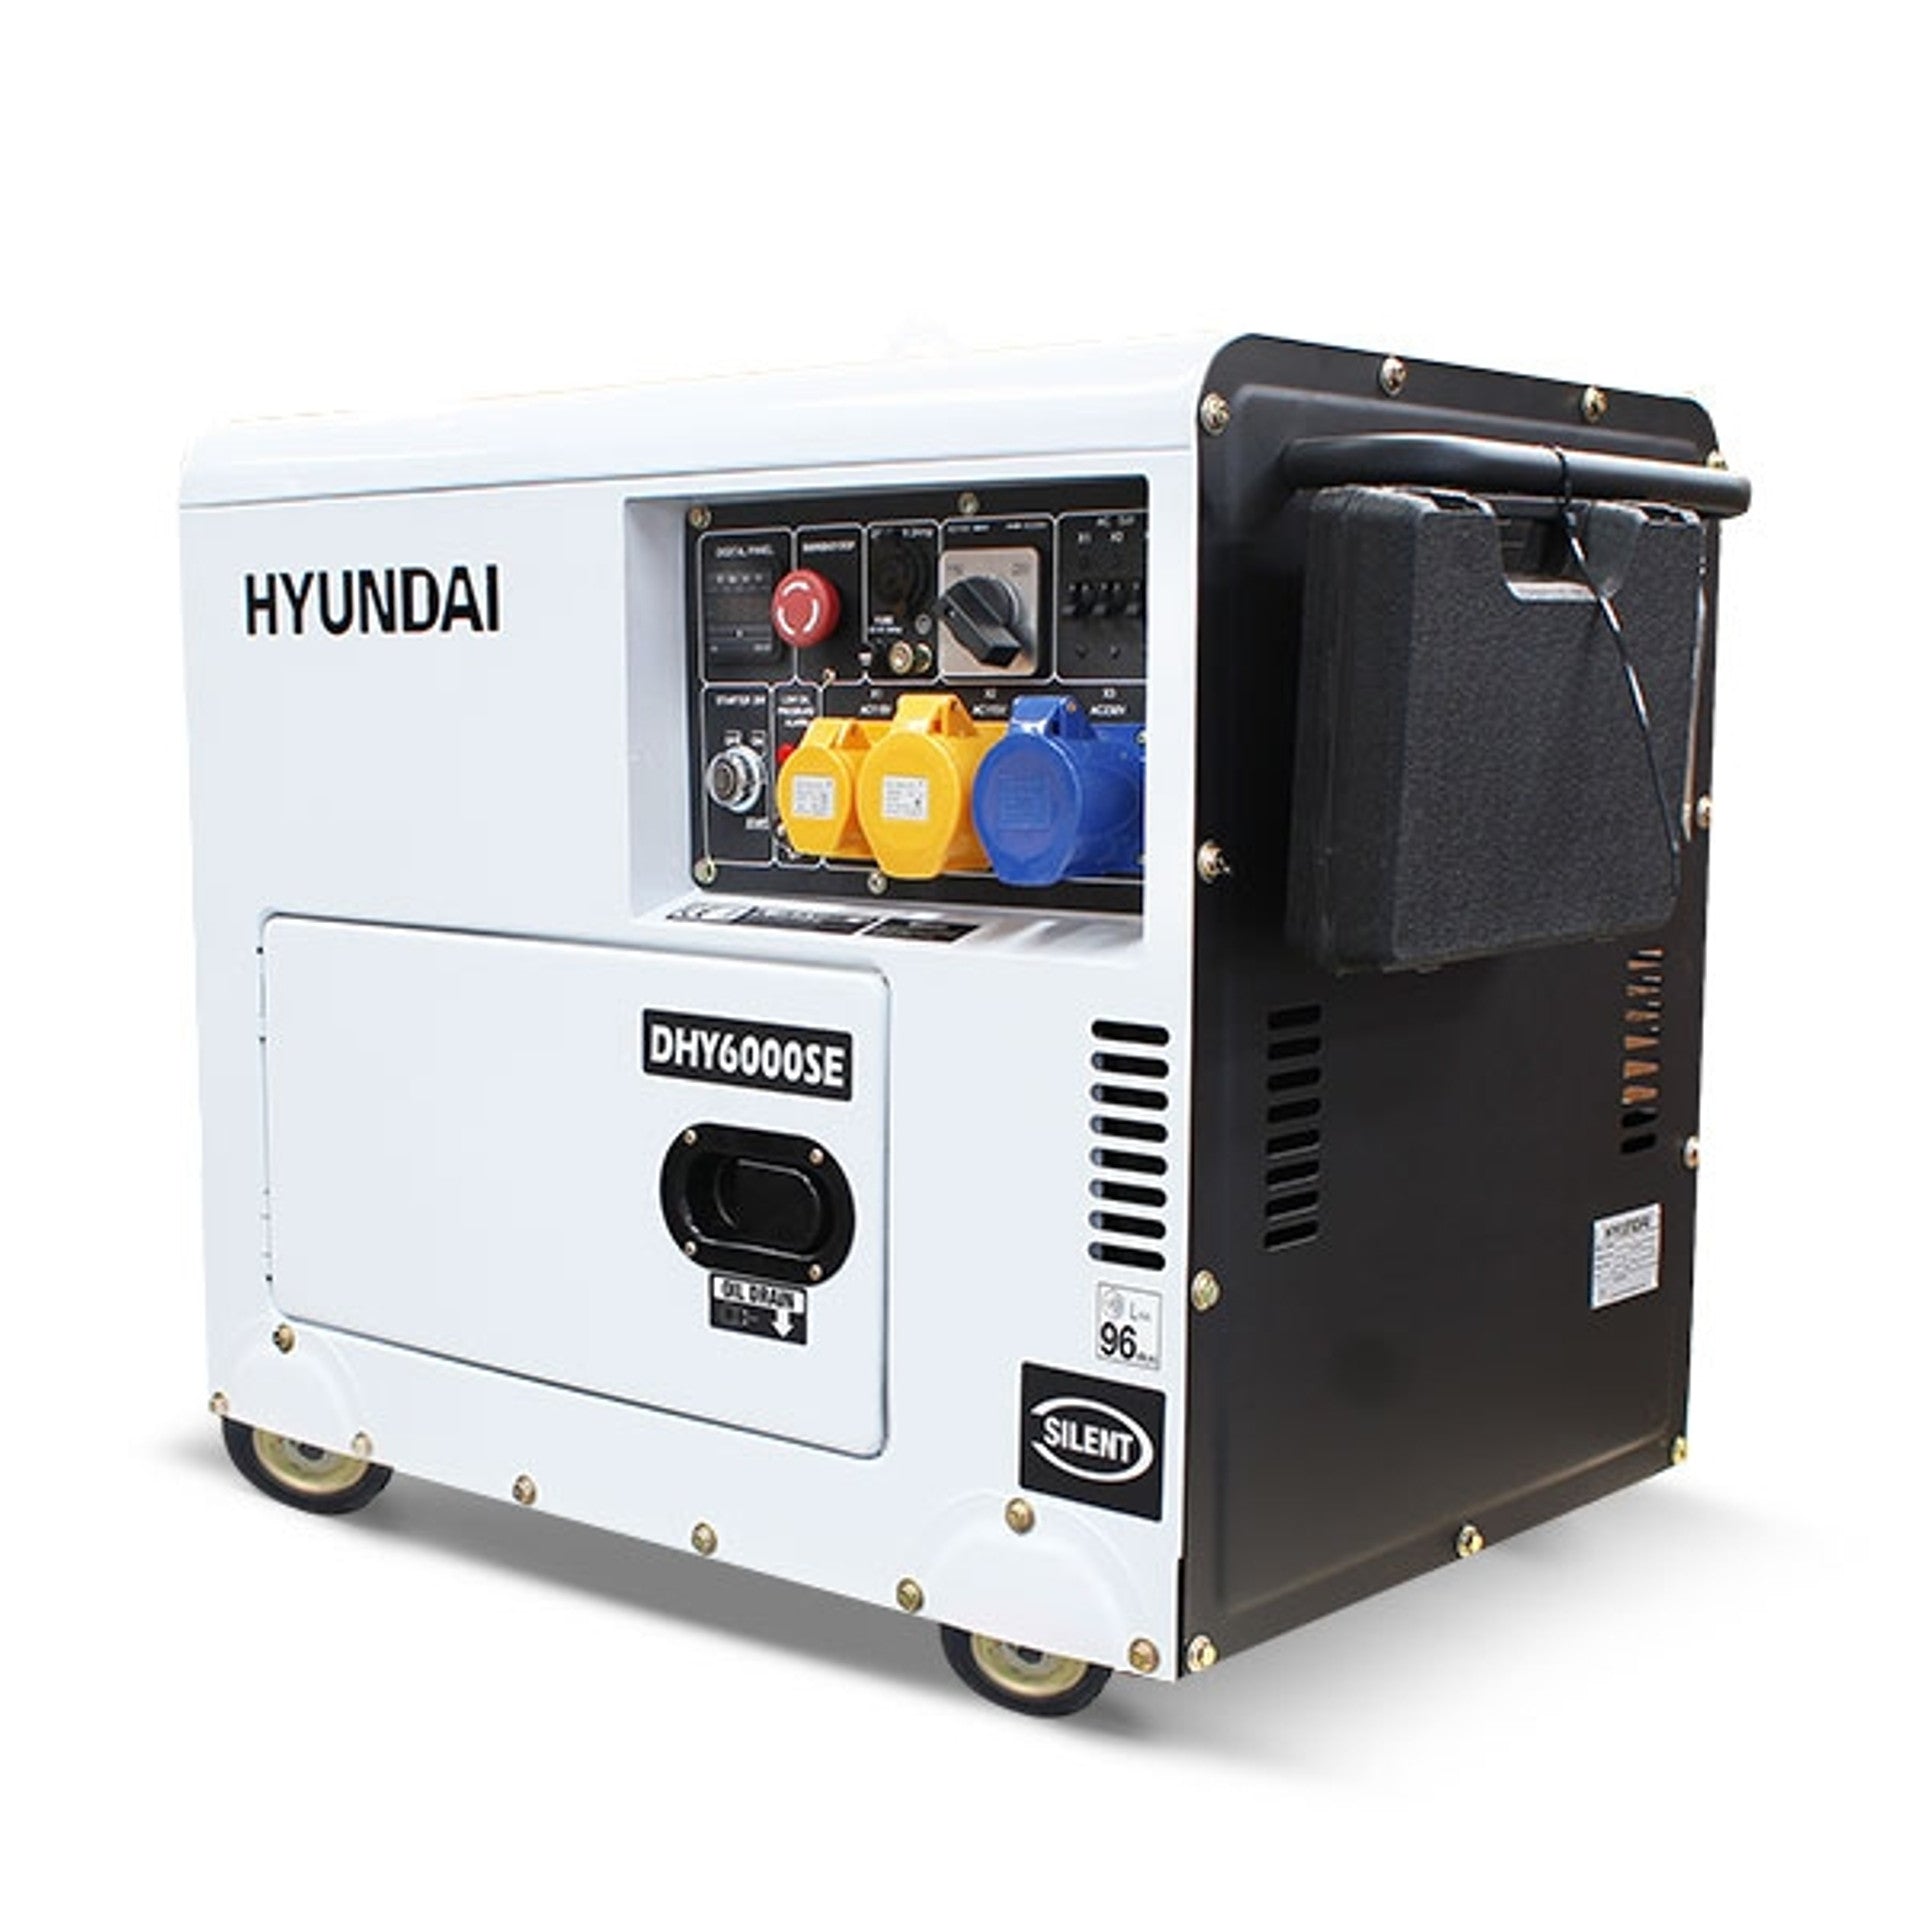 Hyundai DHY6000SE 5.2kW/6.5kVA Silenced Standby Single Phase Diesel Generator